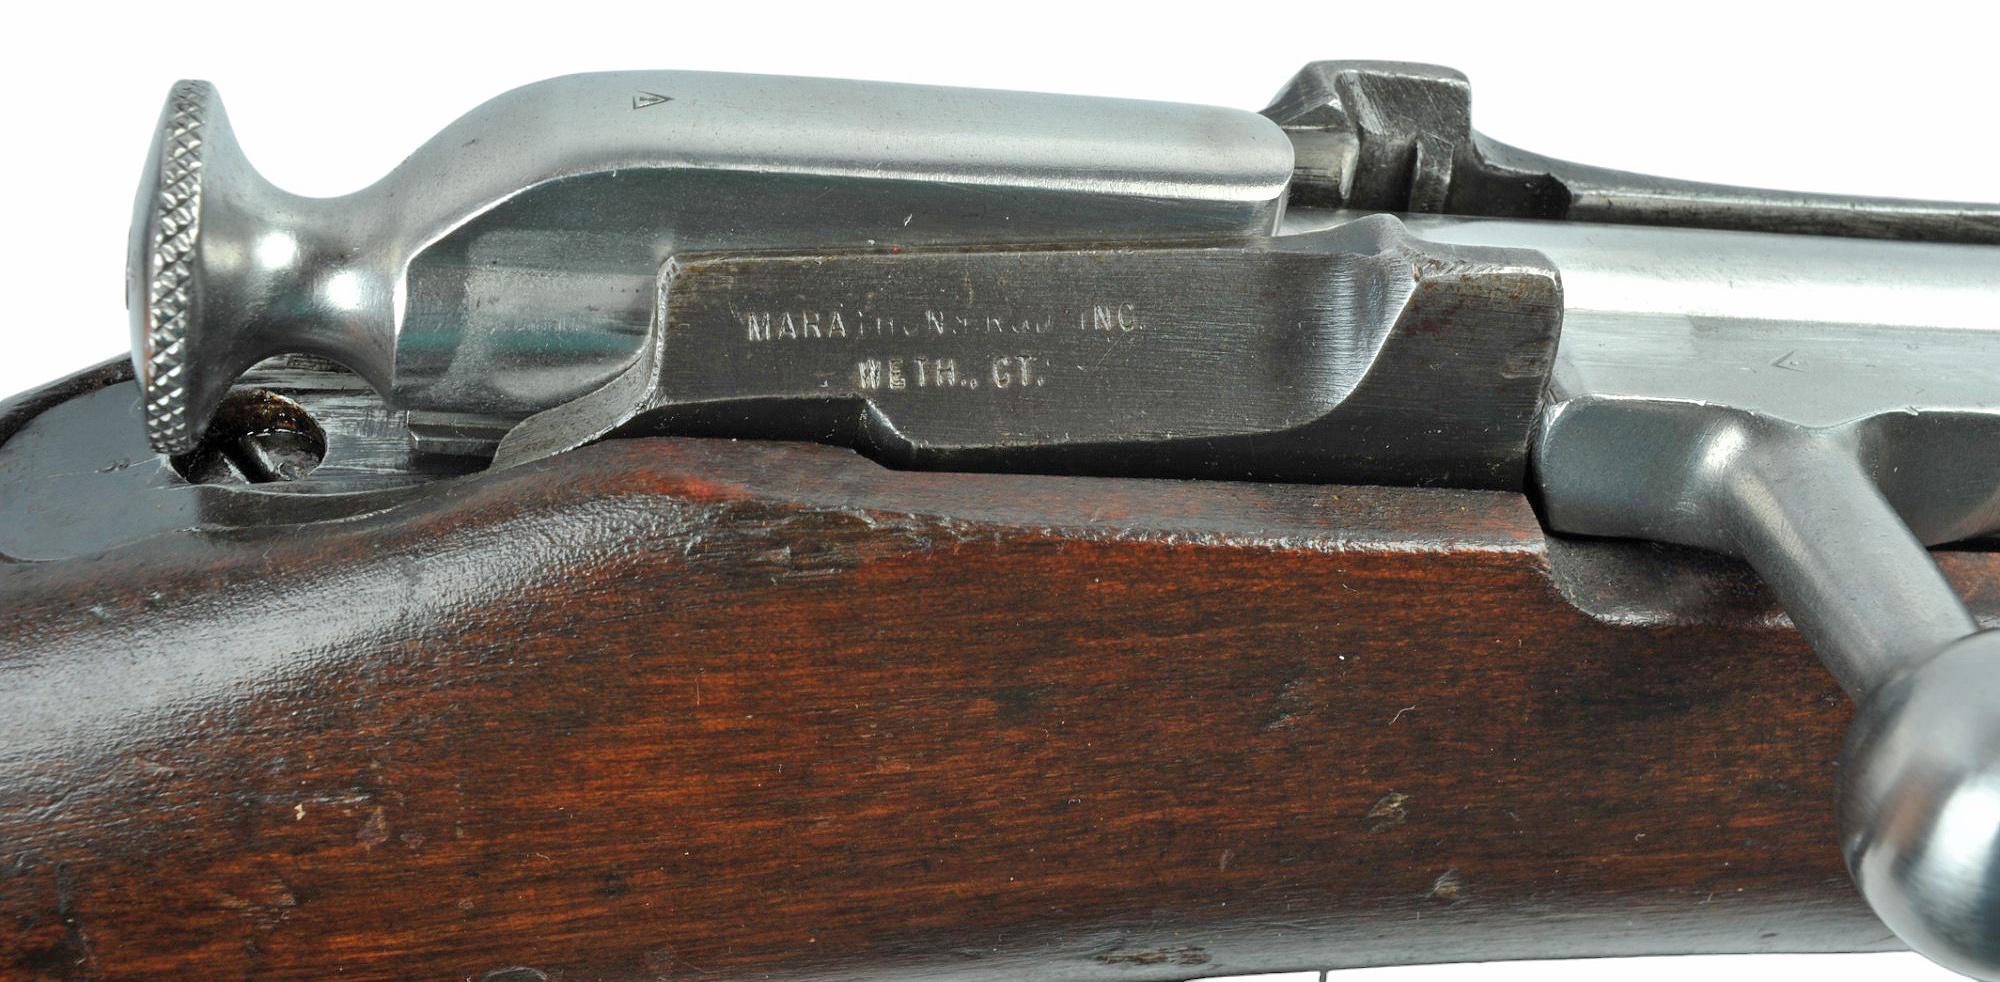 Finnish Military WWII SAKO M28-30 7.62x54r "SKY" Mosin-Nagant Bolt-Action Rifle - FFL # 69739 (VDM1)